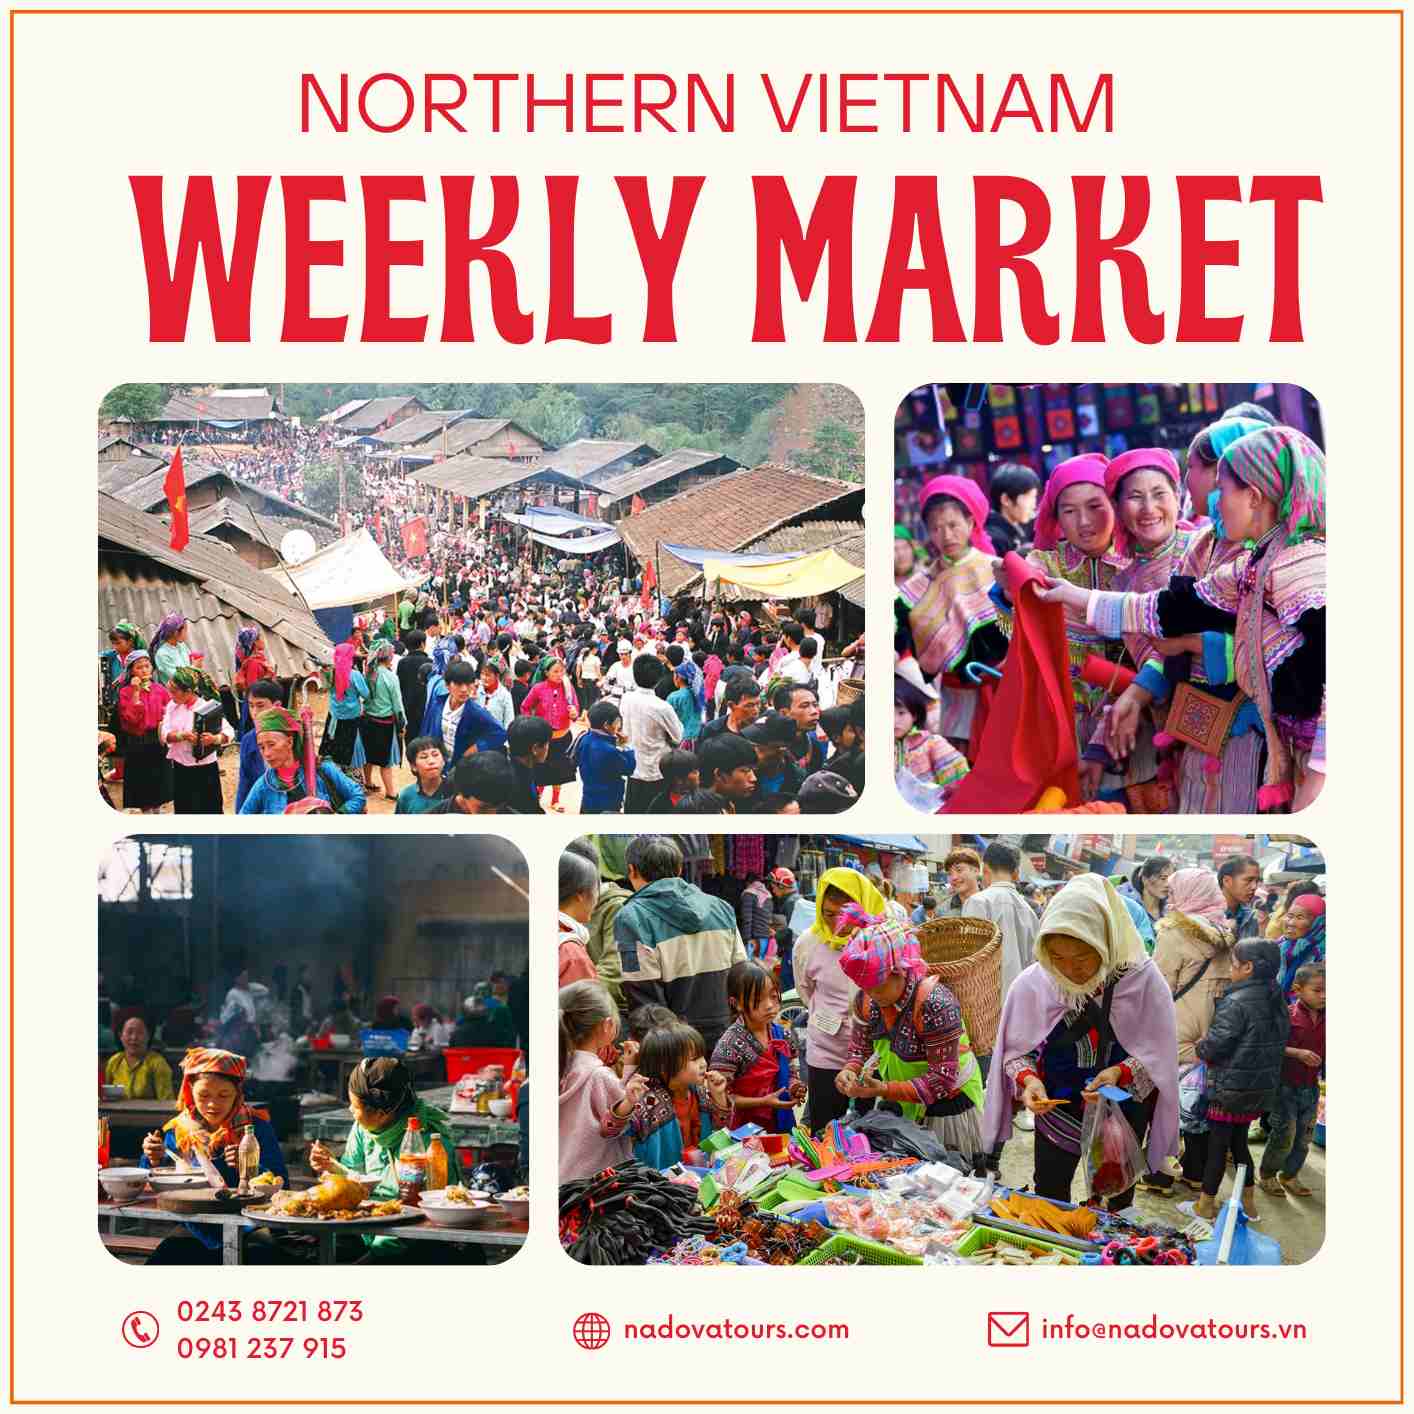 Explore the Northern weekly market in Vietnam